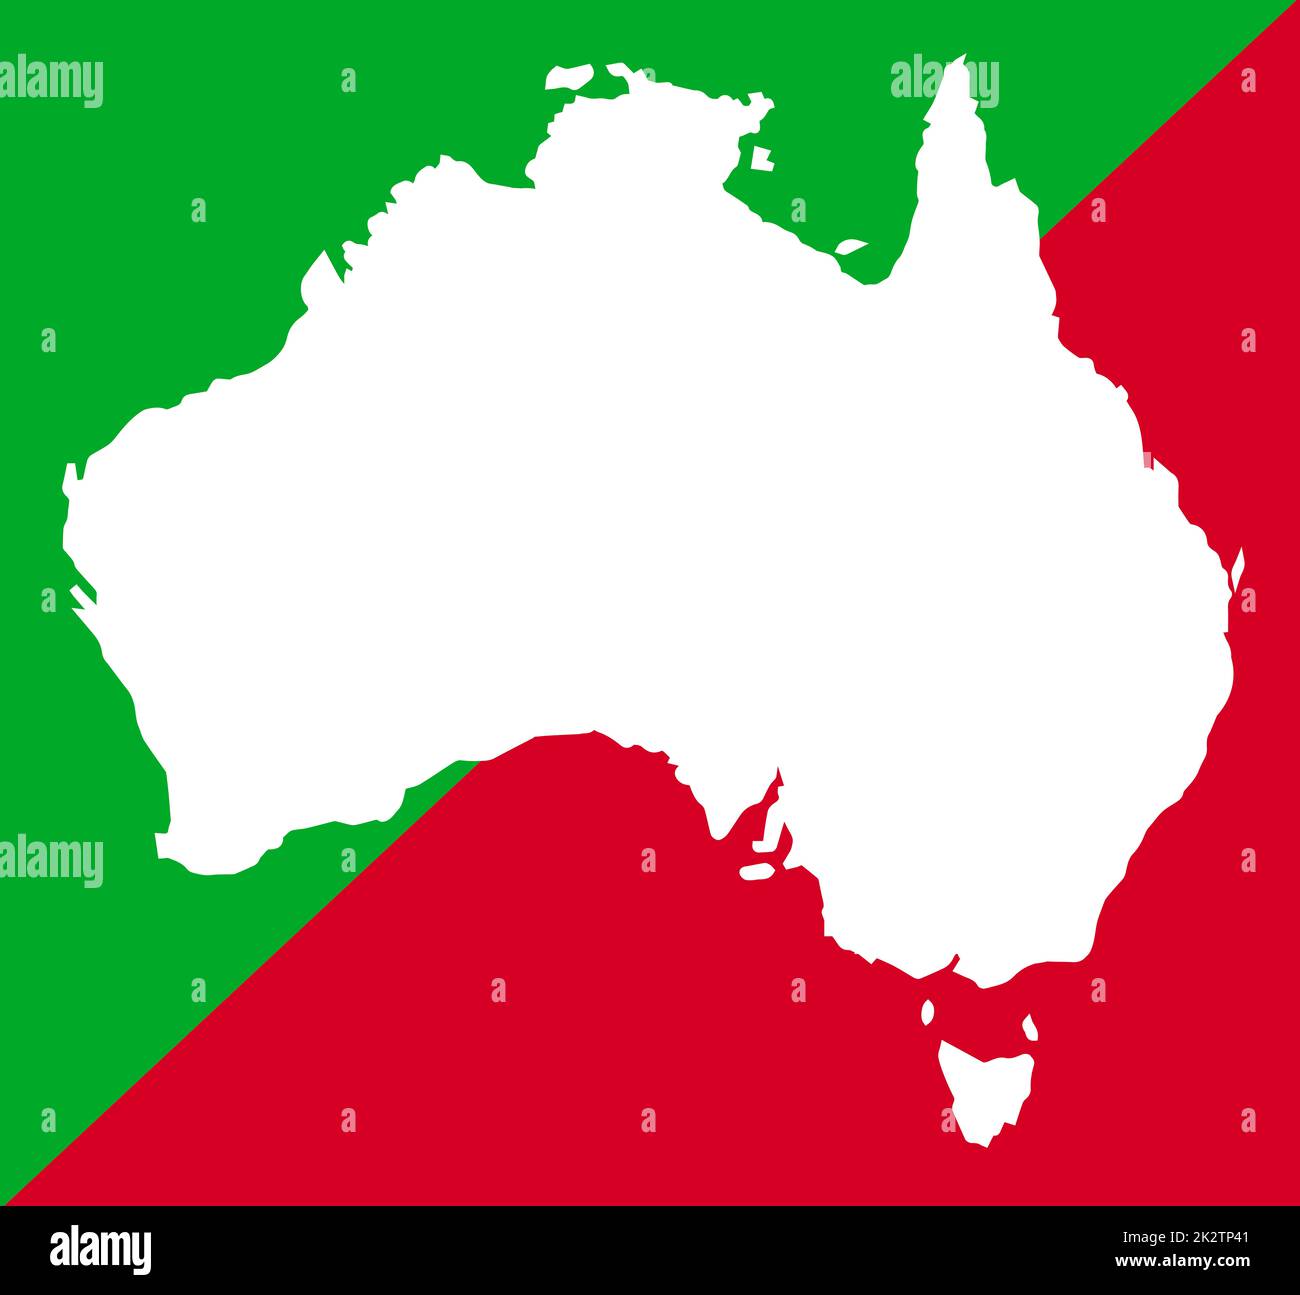 Australien Karte Silhouette Stockfoto